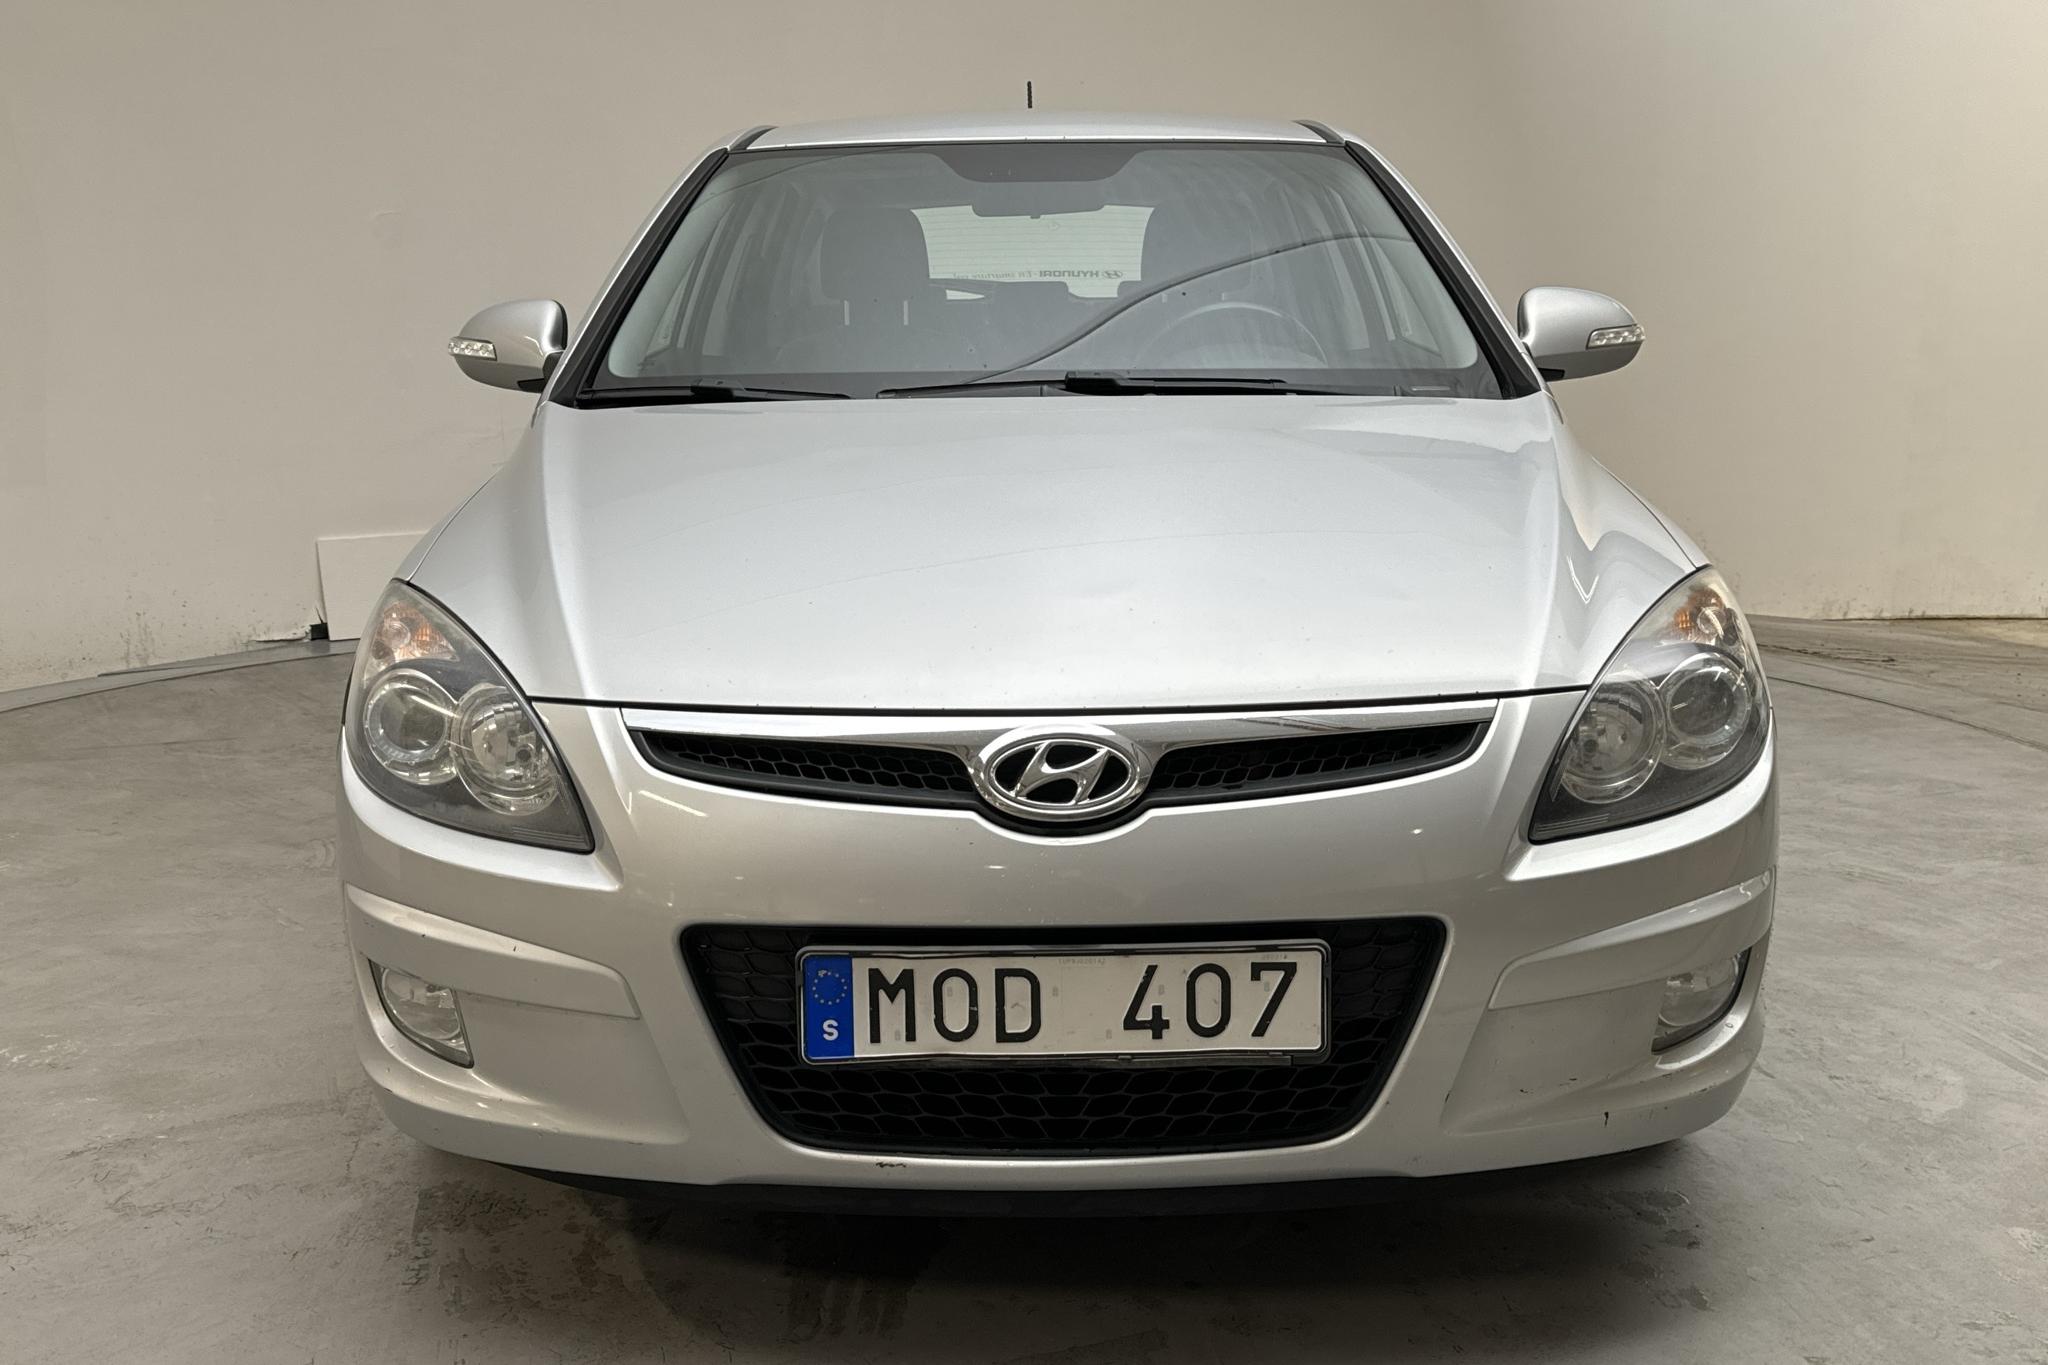 Hyundai i30 2.0 CRDi 5dr (140hk) - 178 320 km - Manual - silver - 2009